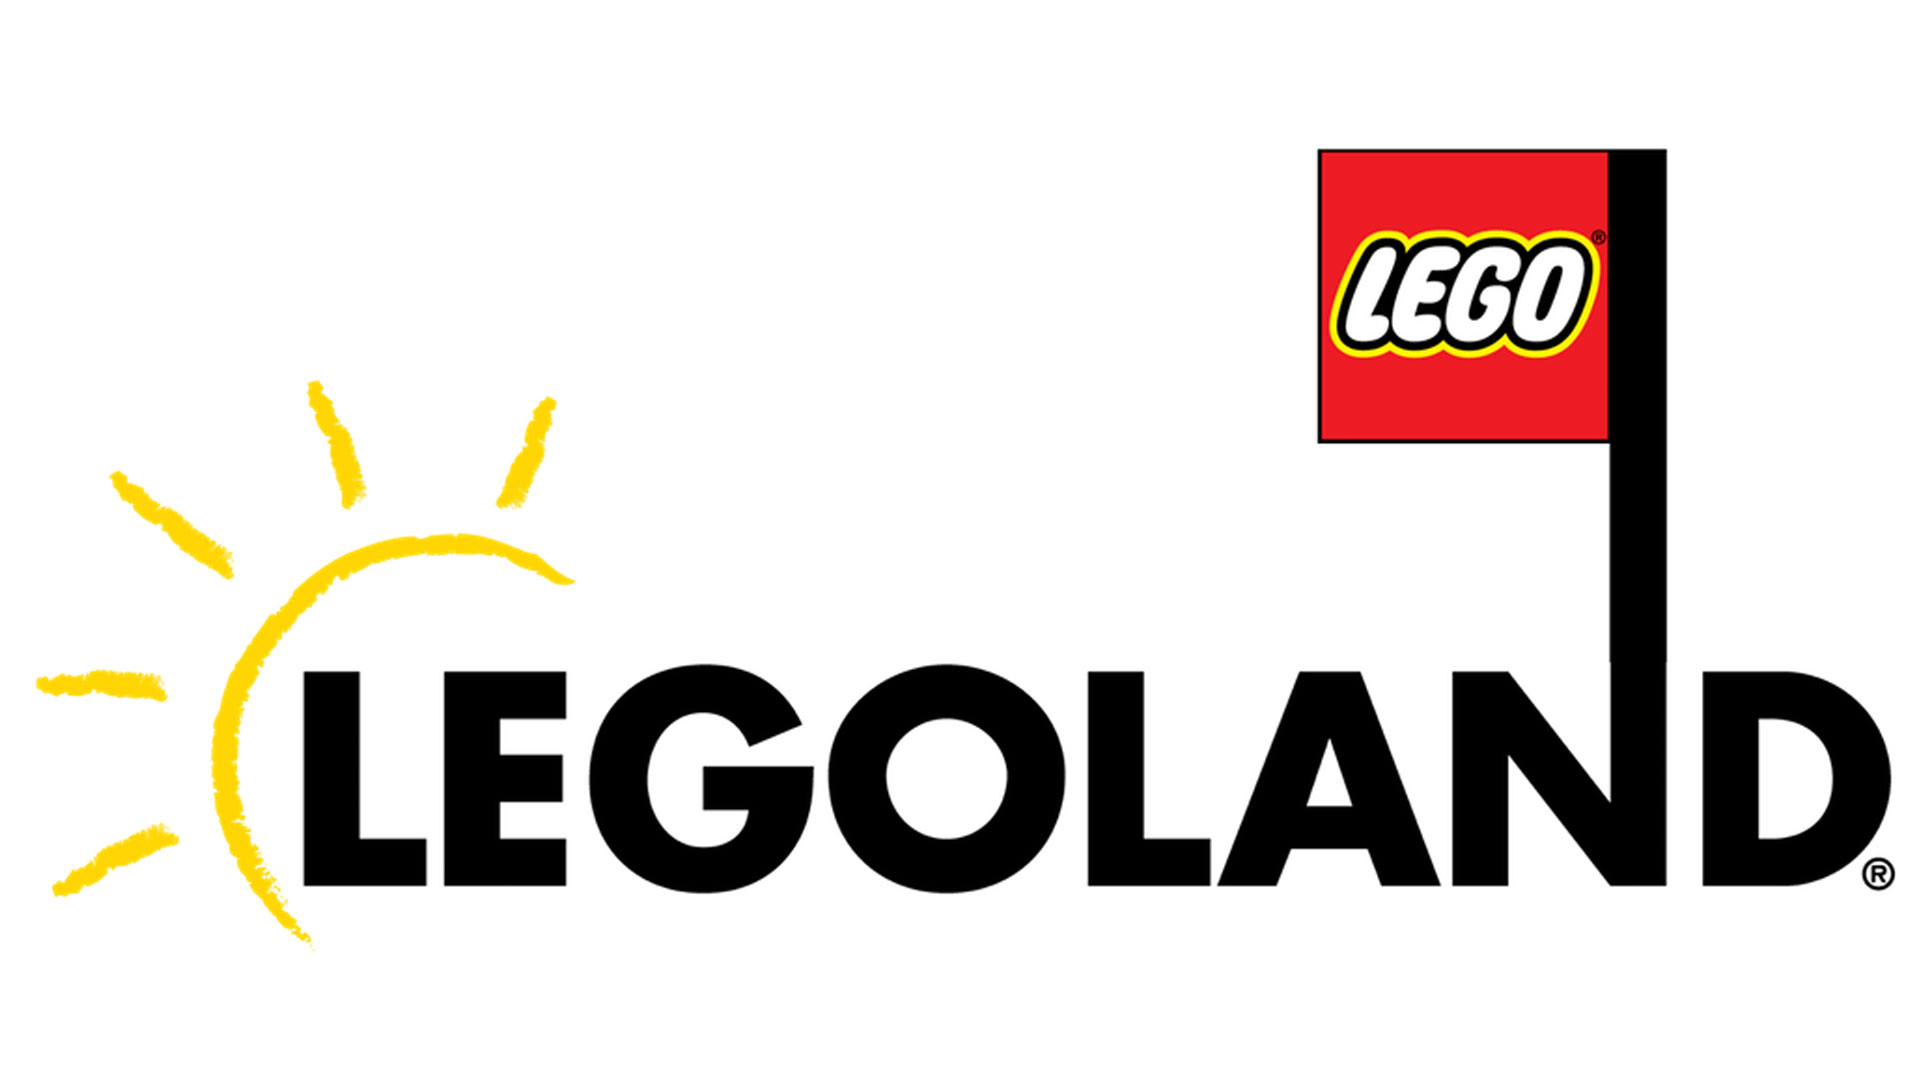 Legoland logo in colour